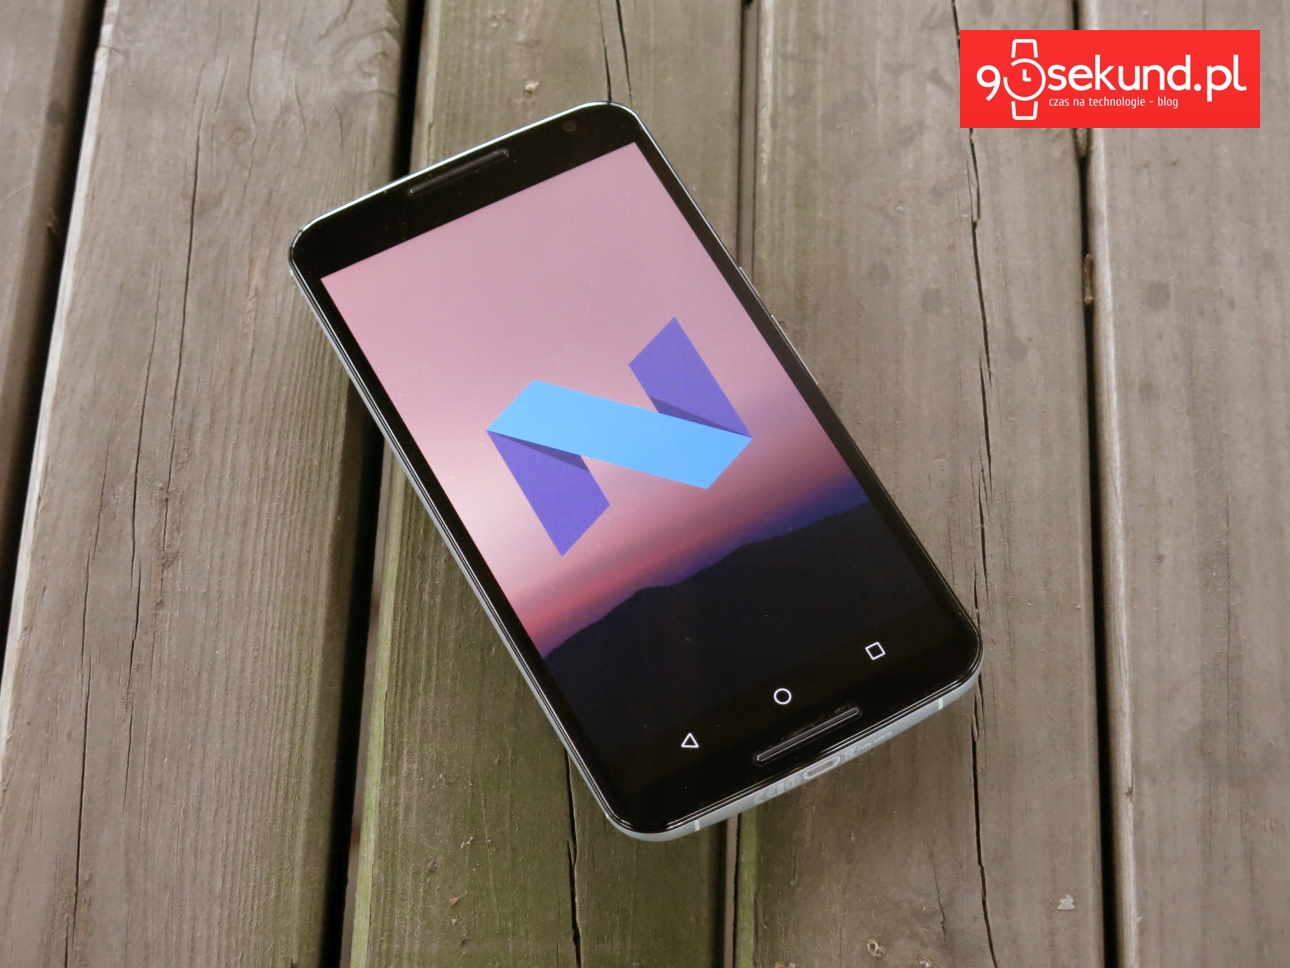 Google Android N na Motorola Nexusie 6 - 90sekund.pl